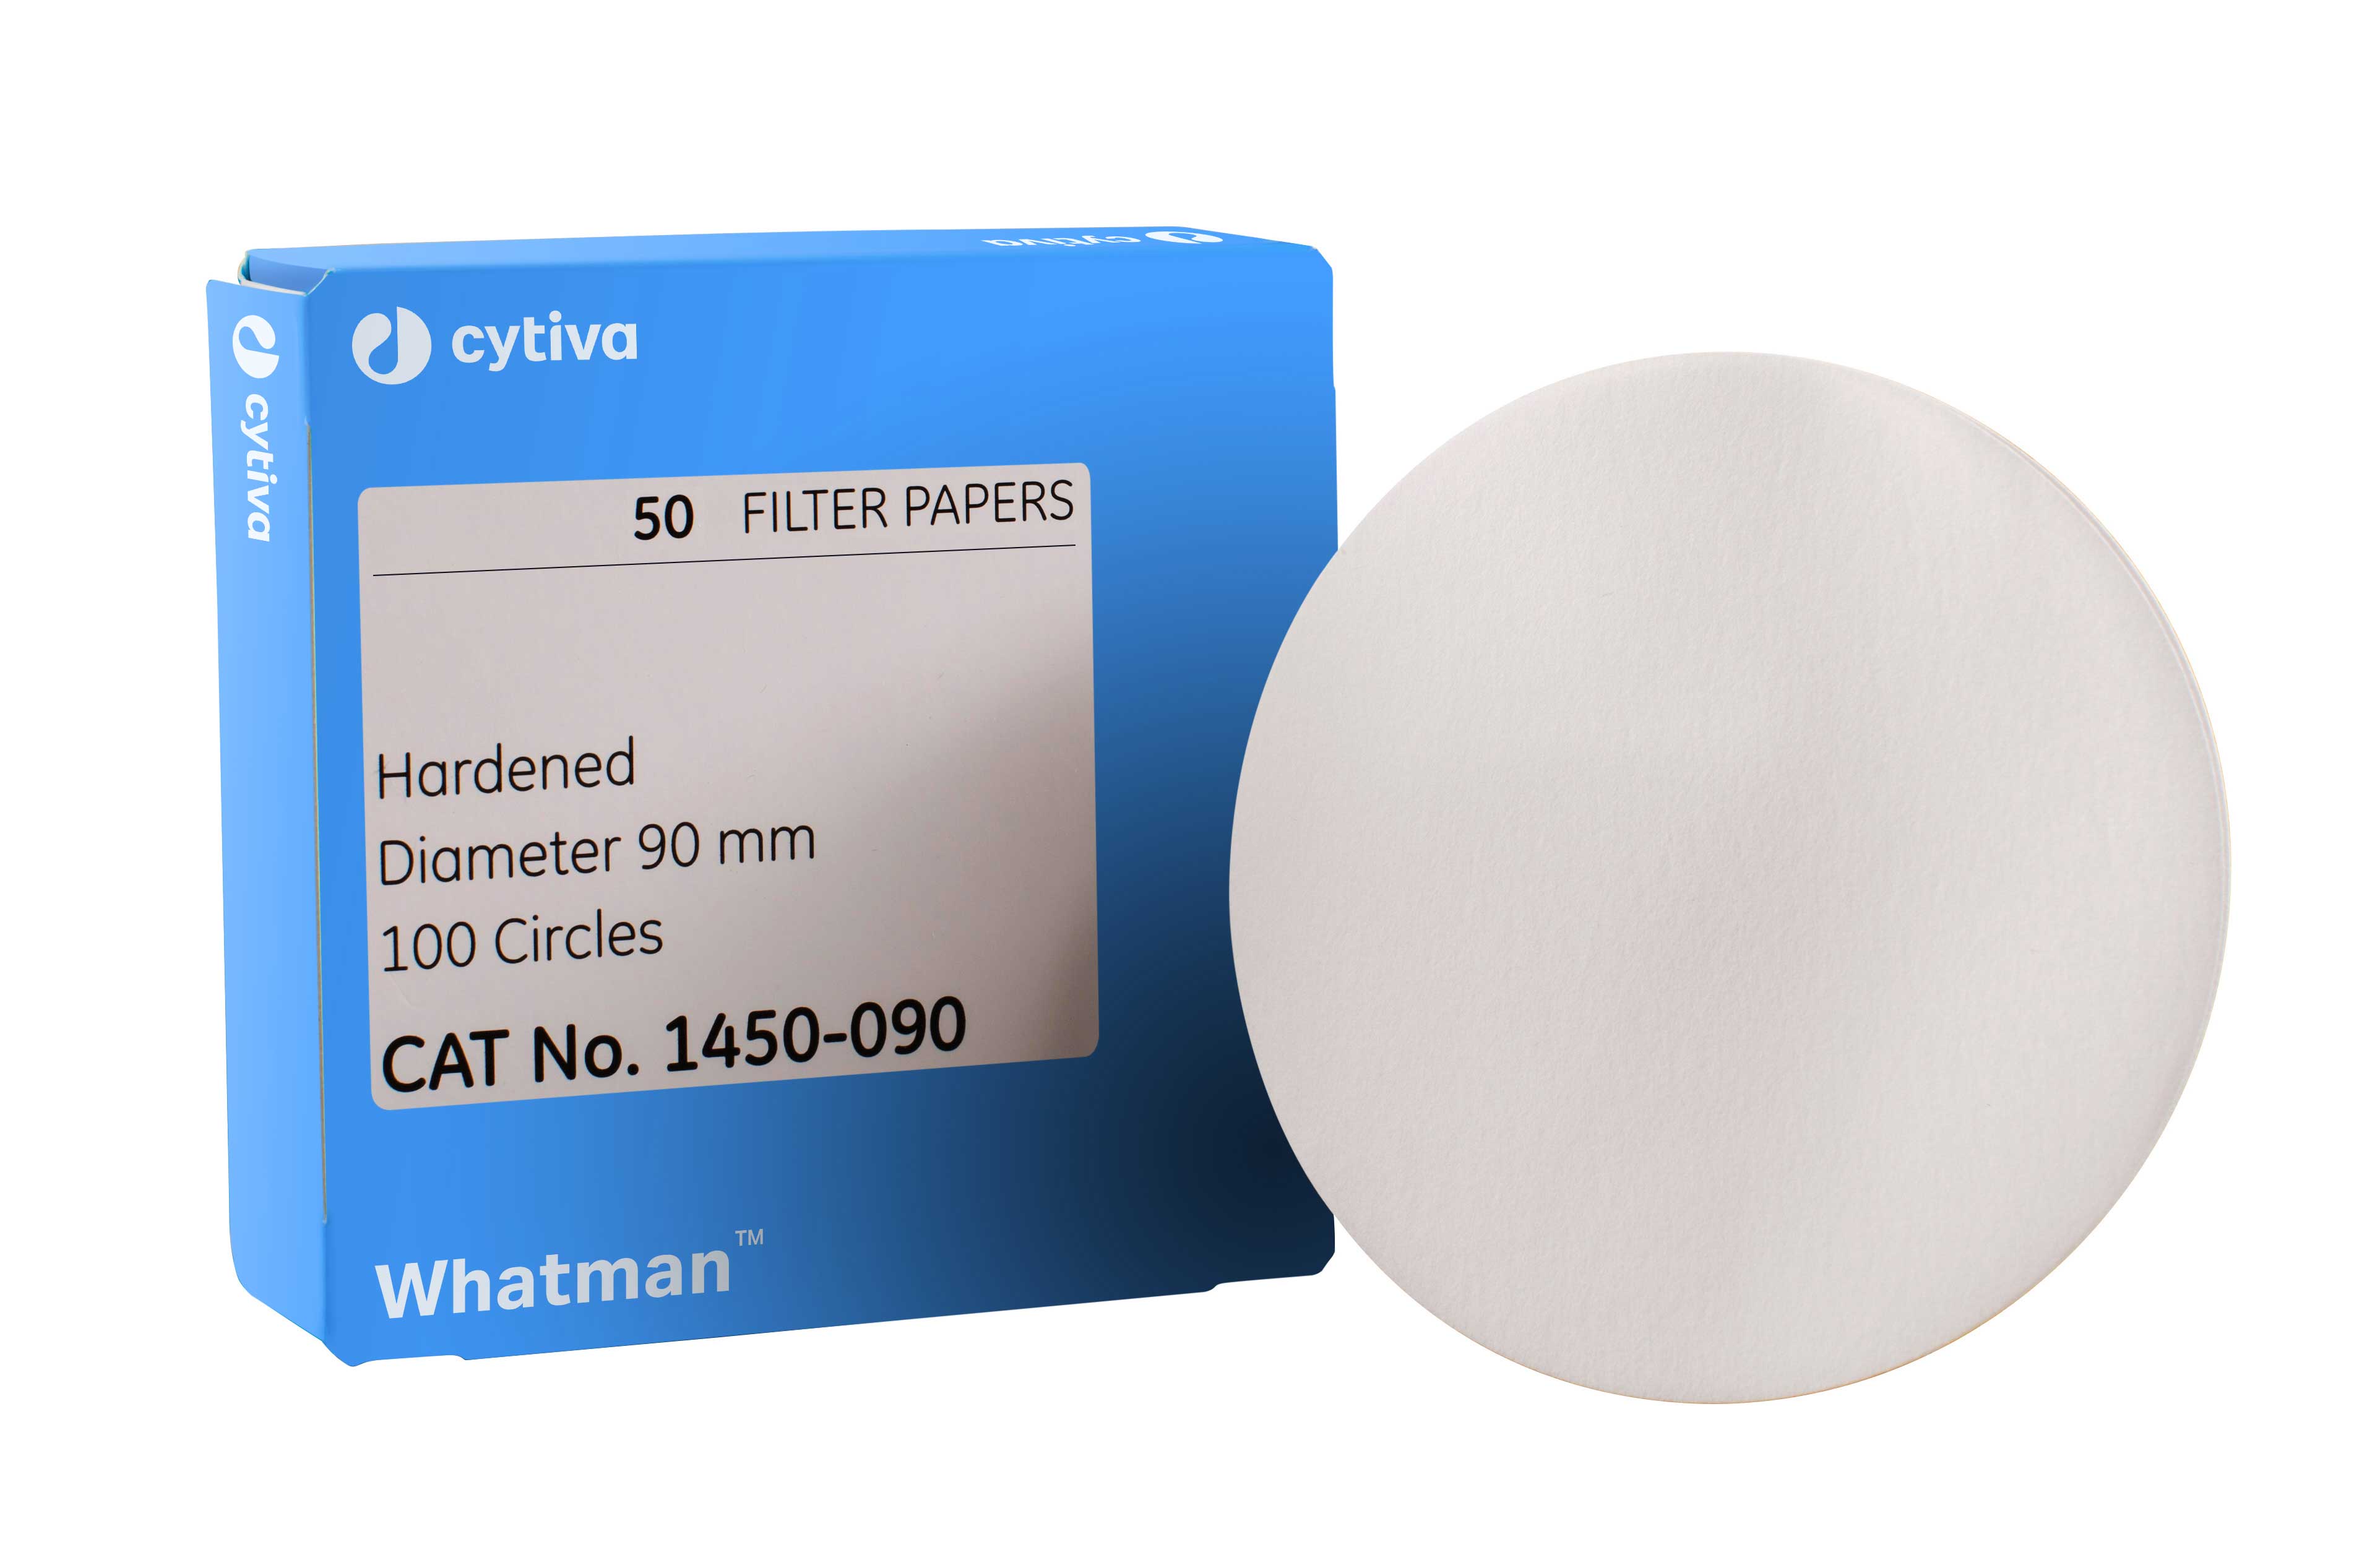 Filtro de papel de celulosa pura. Whatman™ (Cytiva). Disco Grado 50 Celulosa pura sin cenizas. Ø (mm): 320. Retención típica (µm): 2,7